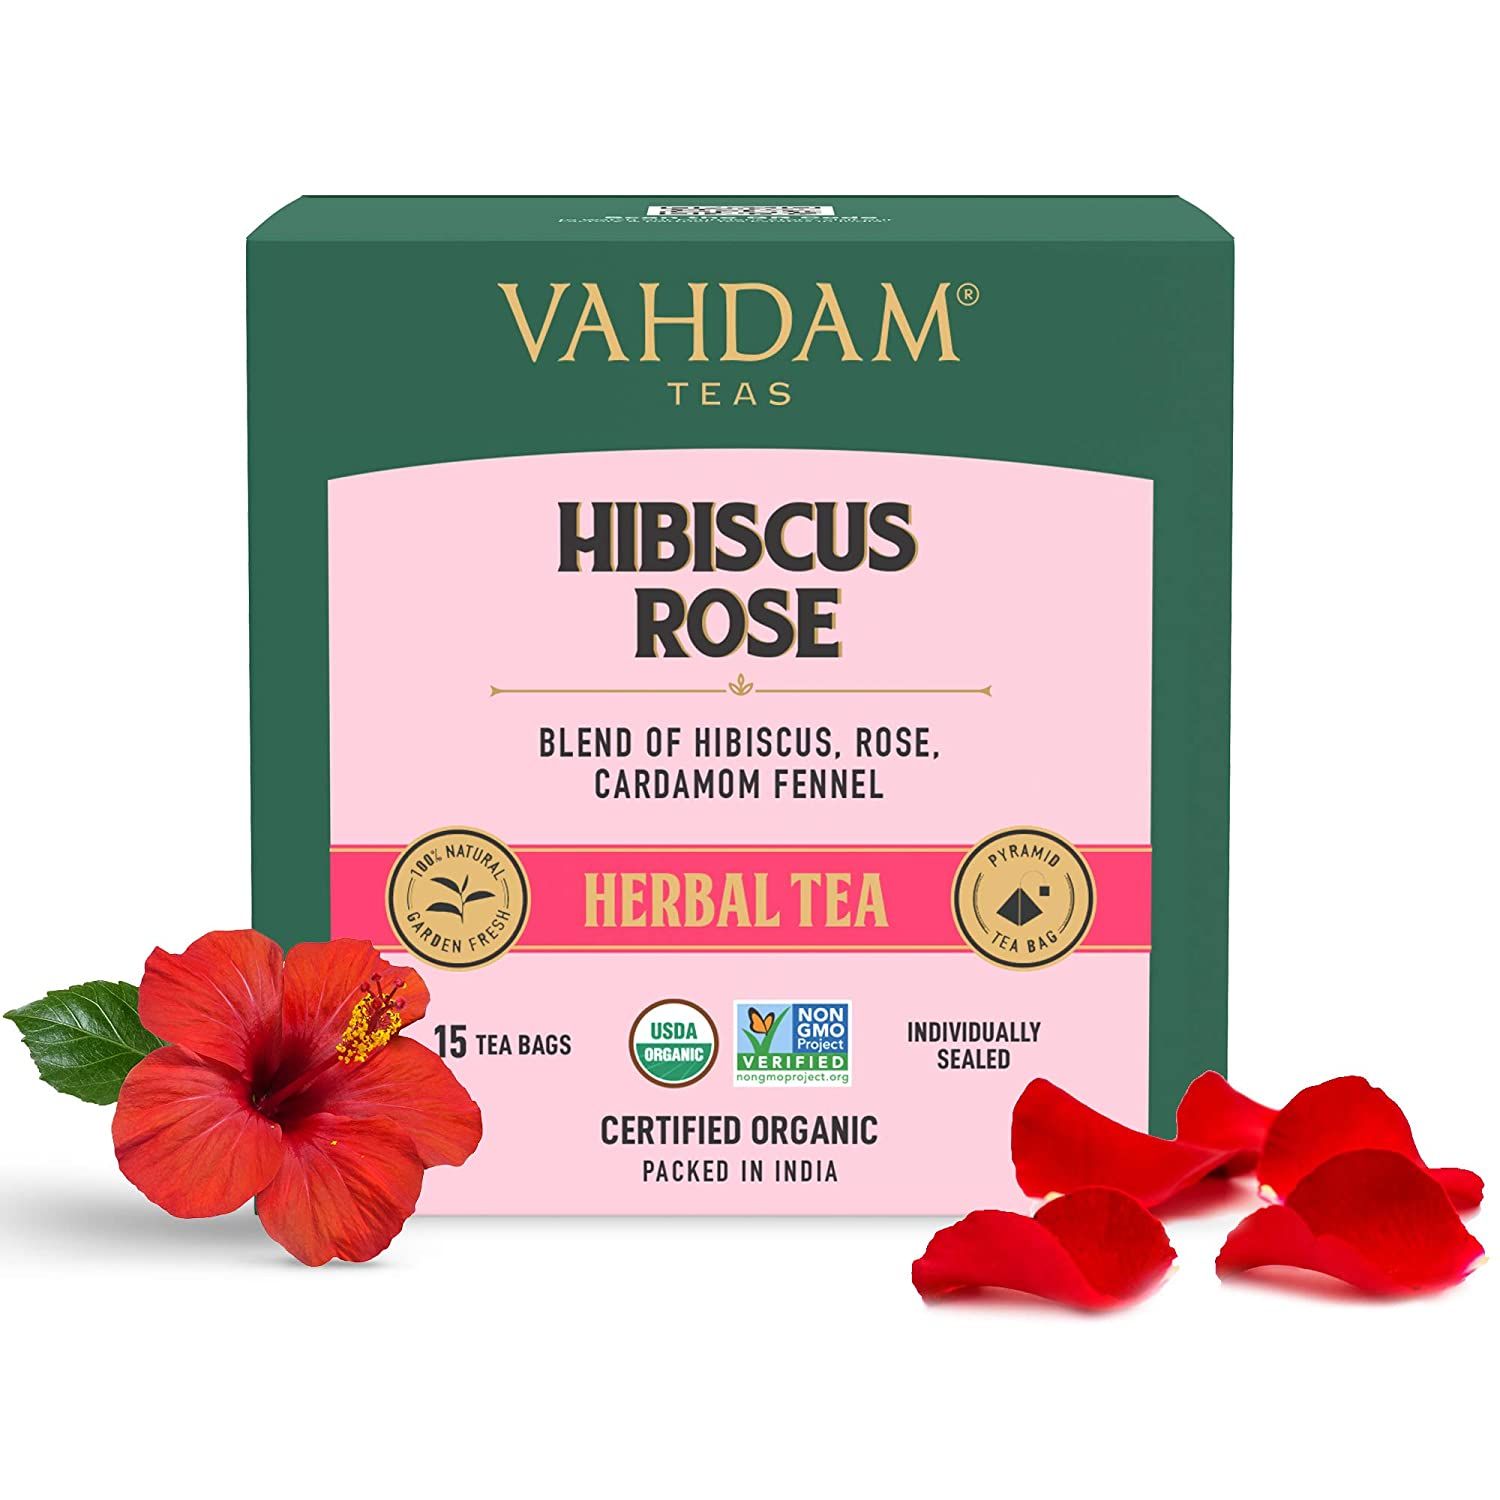 Vahdam Hibiscus Rose Herbal Tea Image